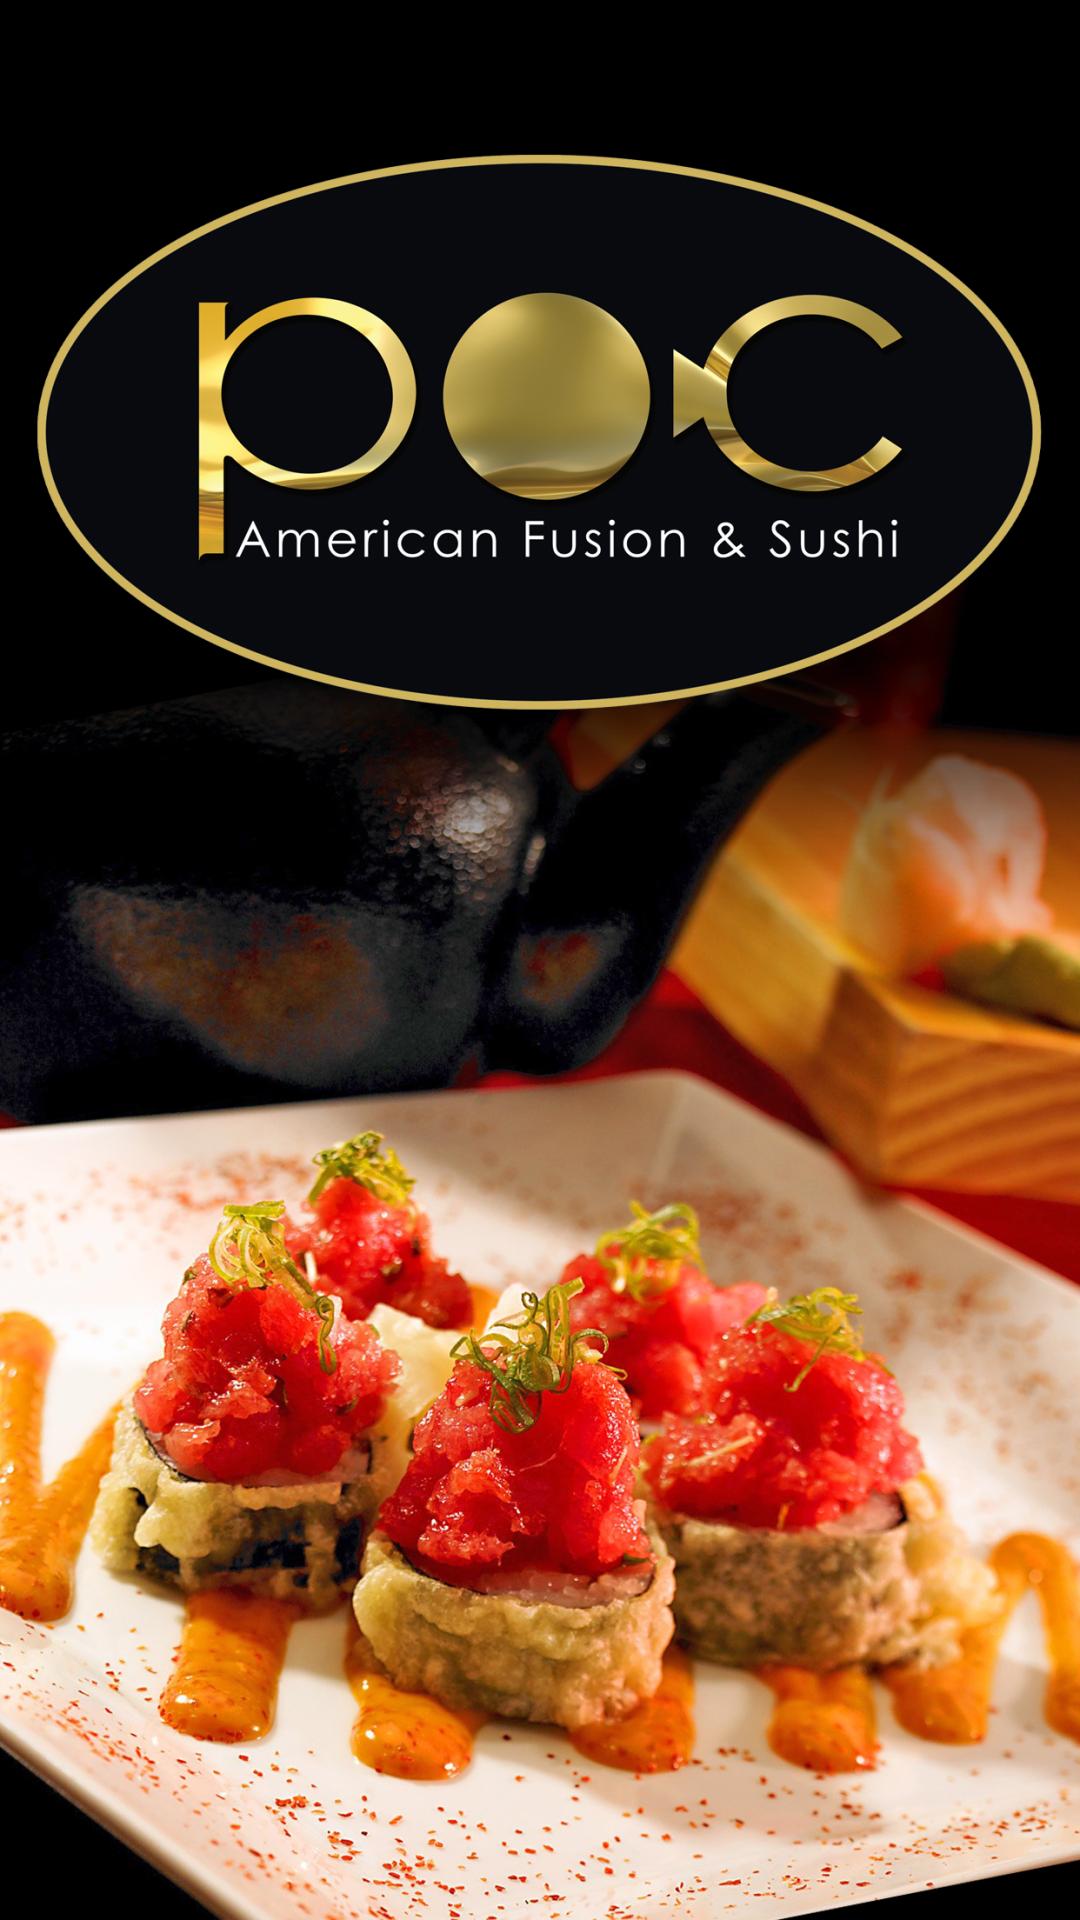 Poc American Fusion & Sushi